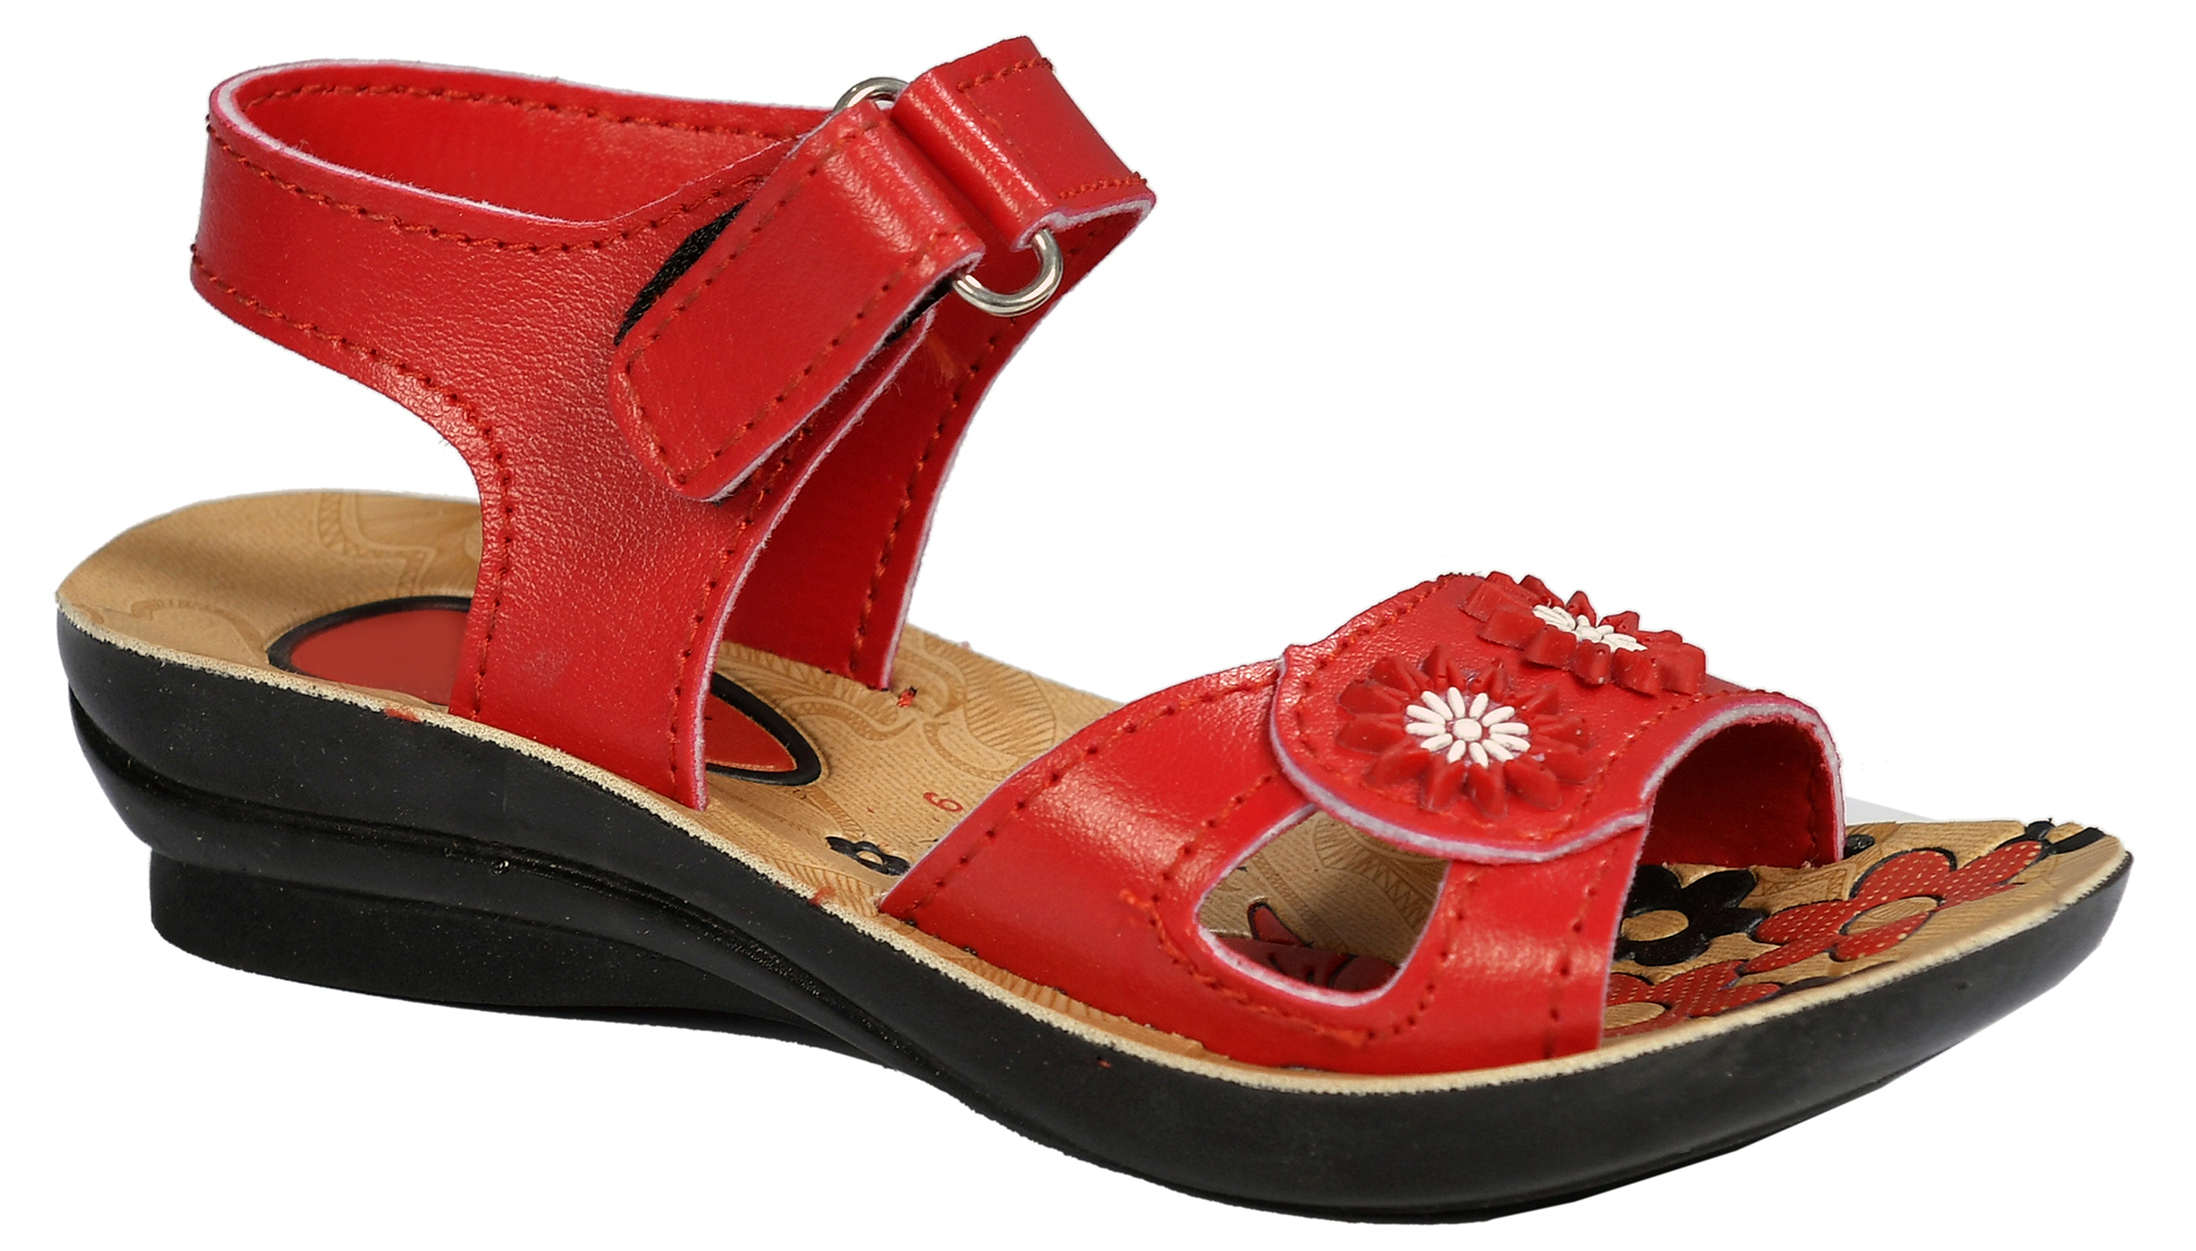 Buy Red Sandal For Girls Online @ ₹359 from ShopClues